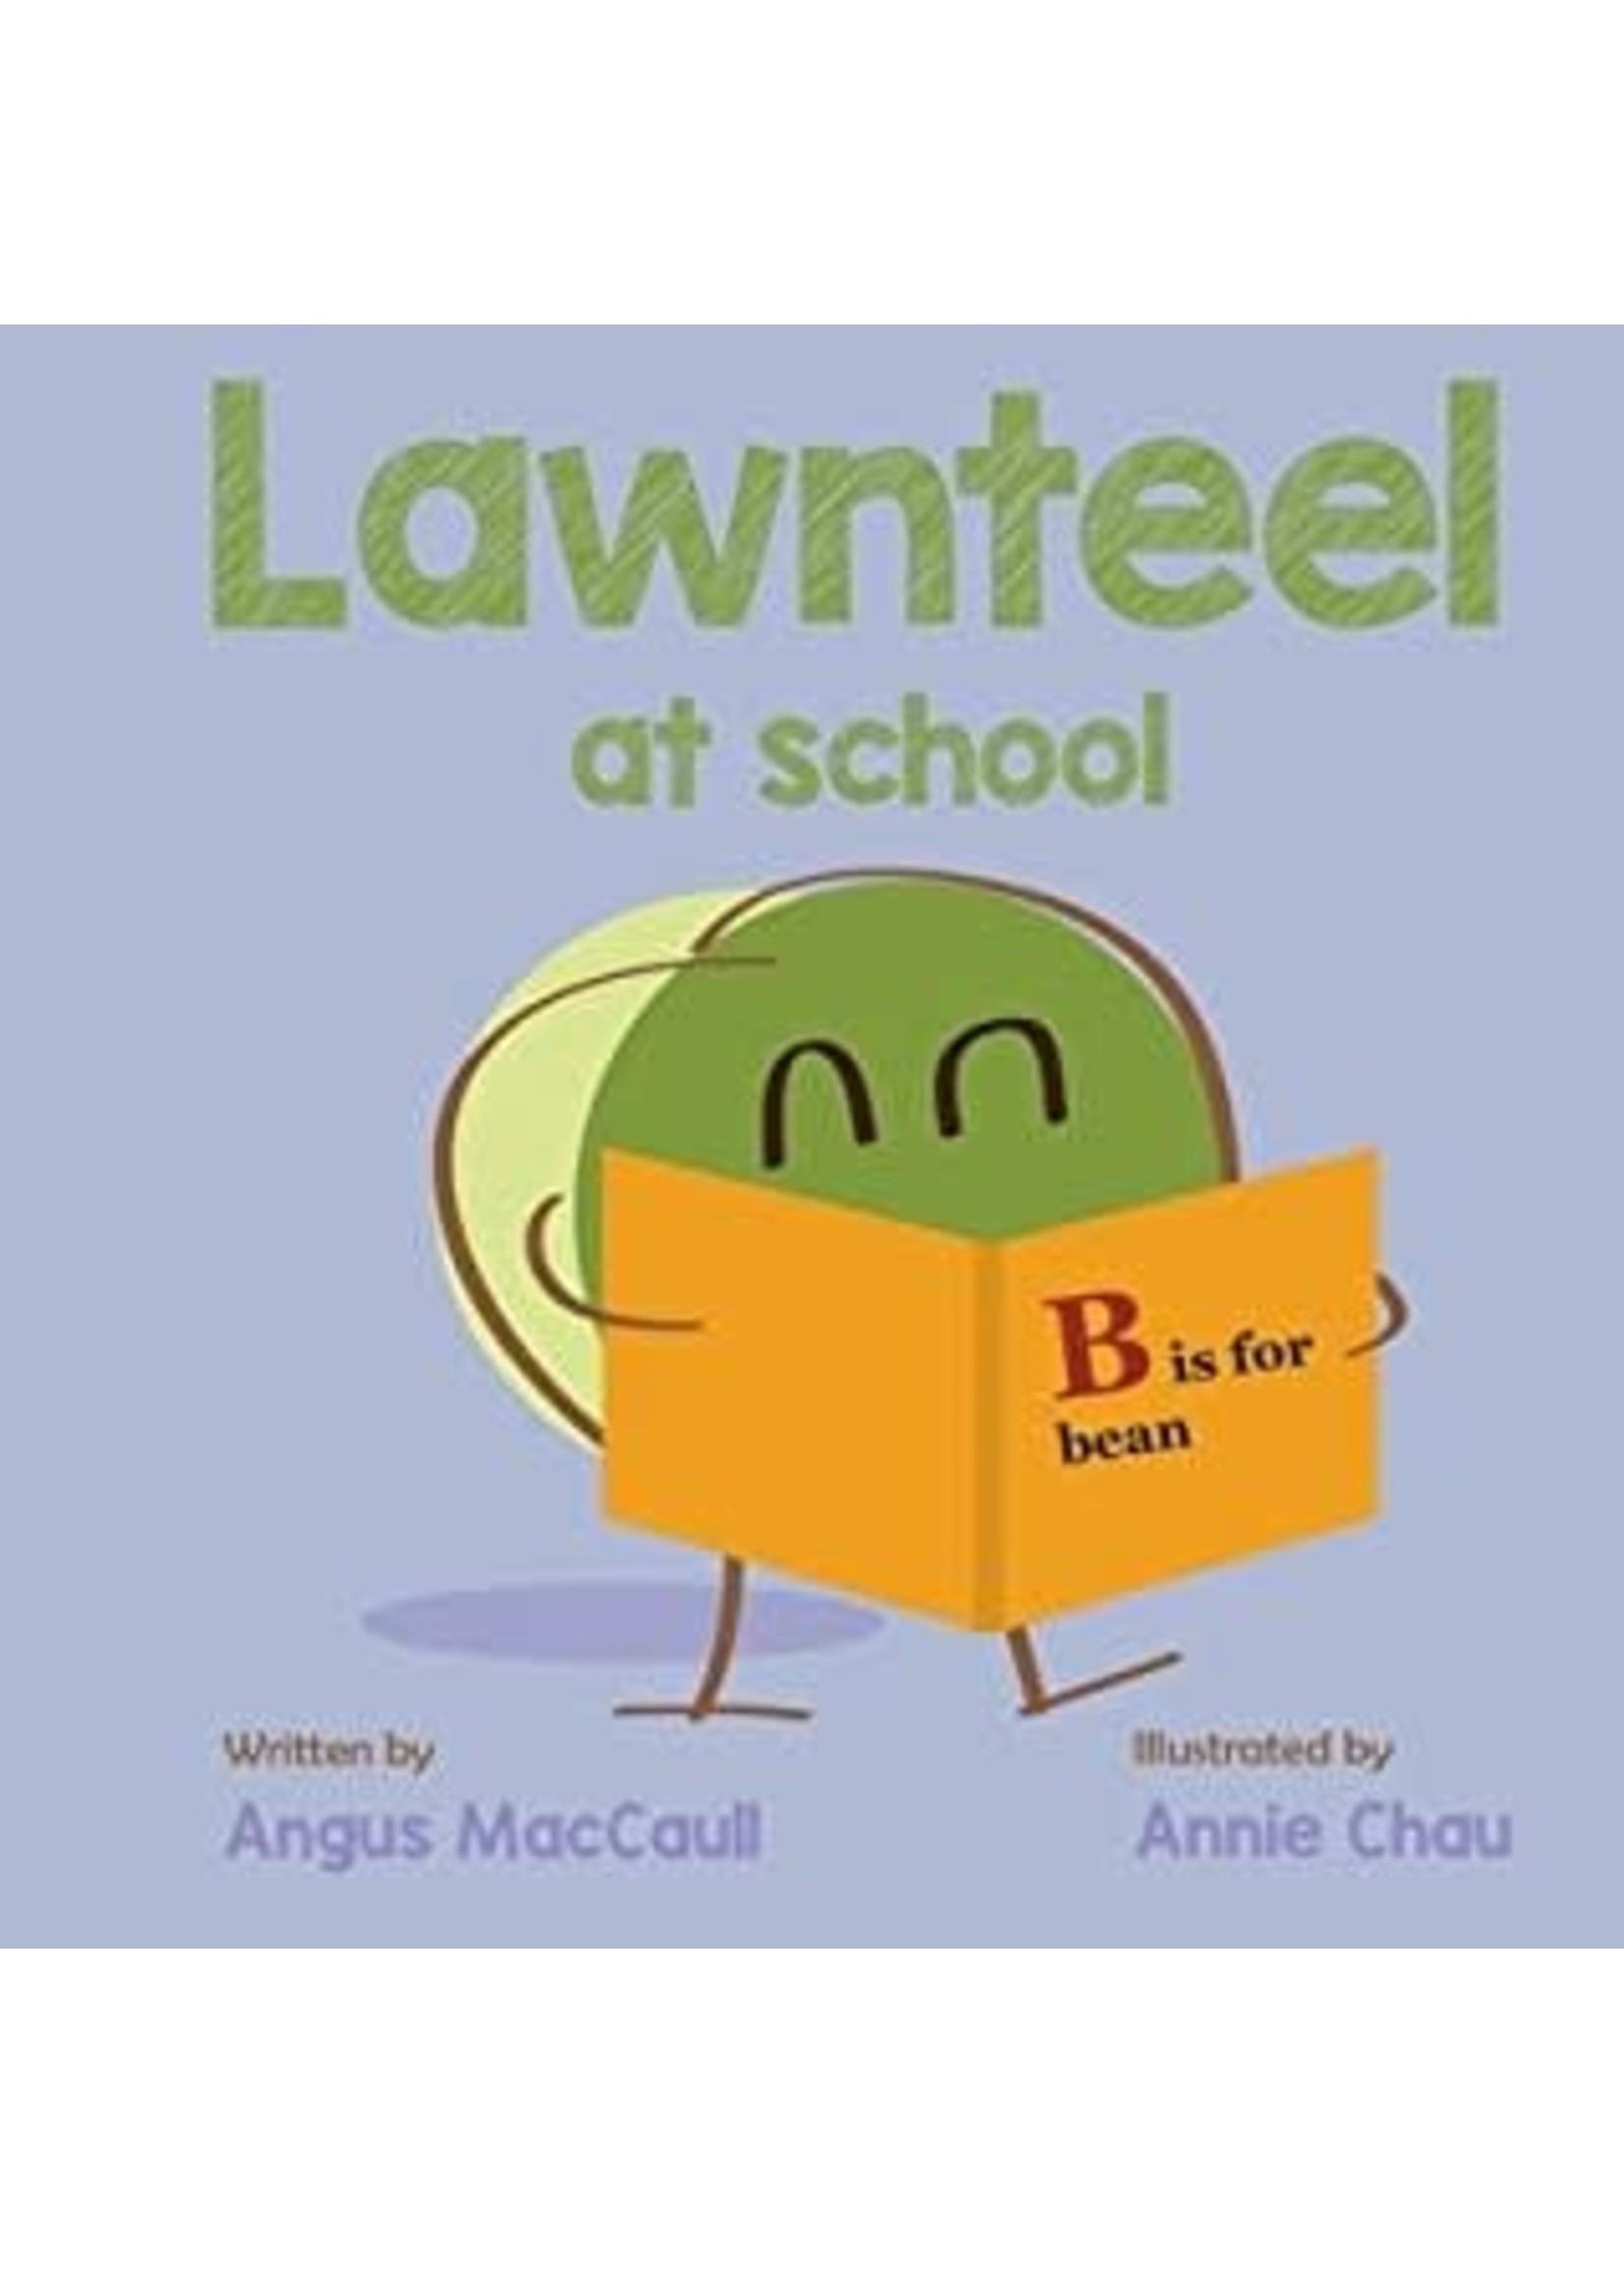 Lawnteel at School by Angus MacCaull